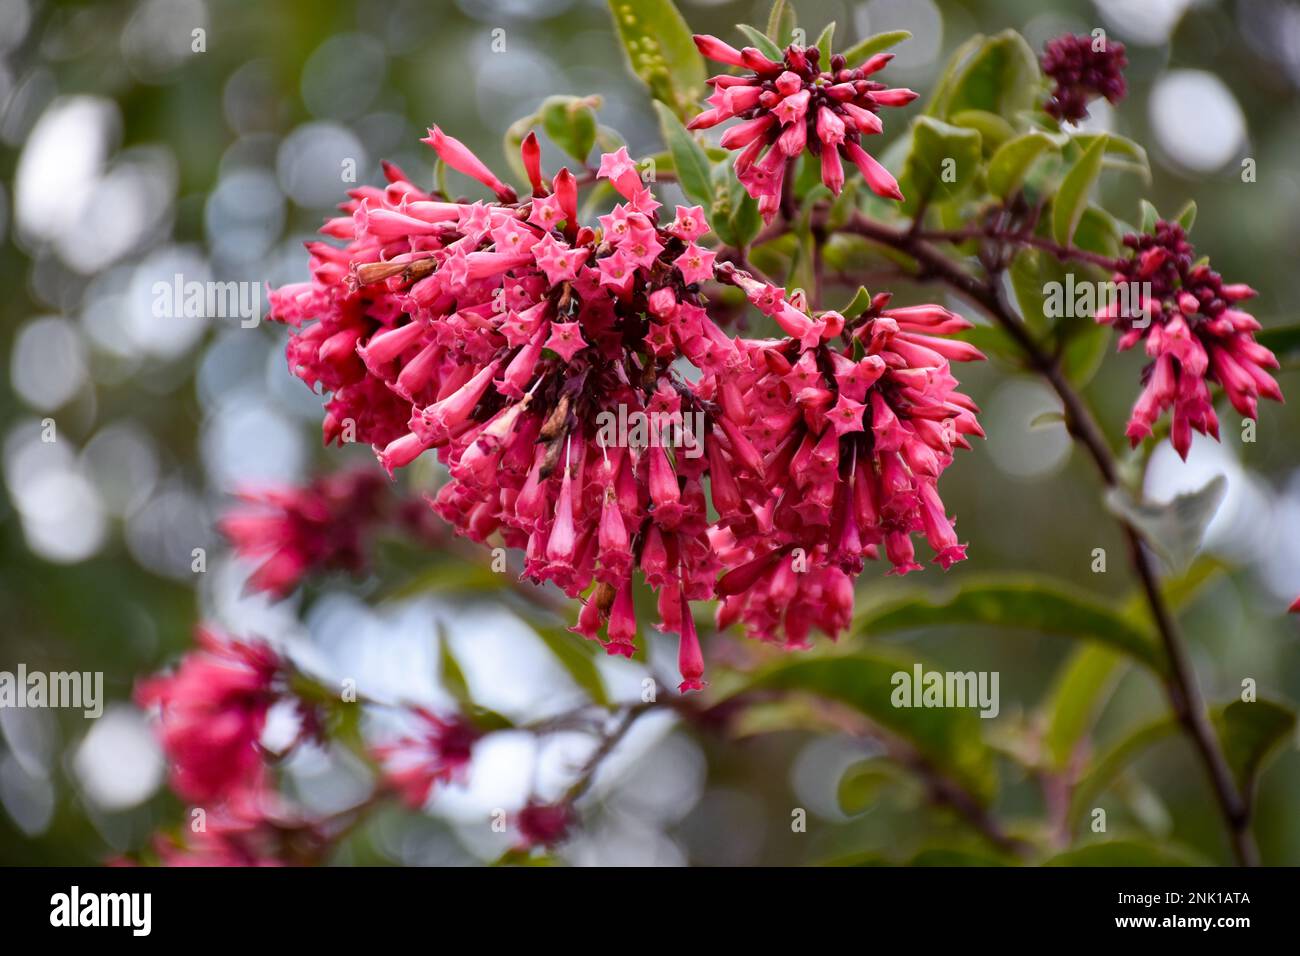 Bunch of Jessamine red Cestrum flower Stock Photo